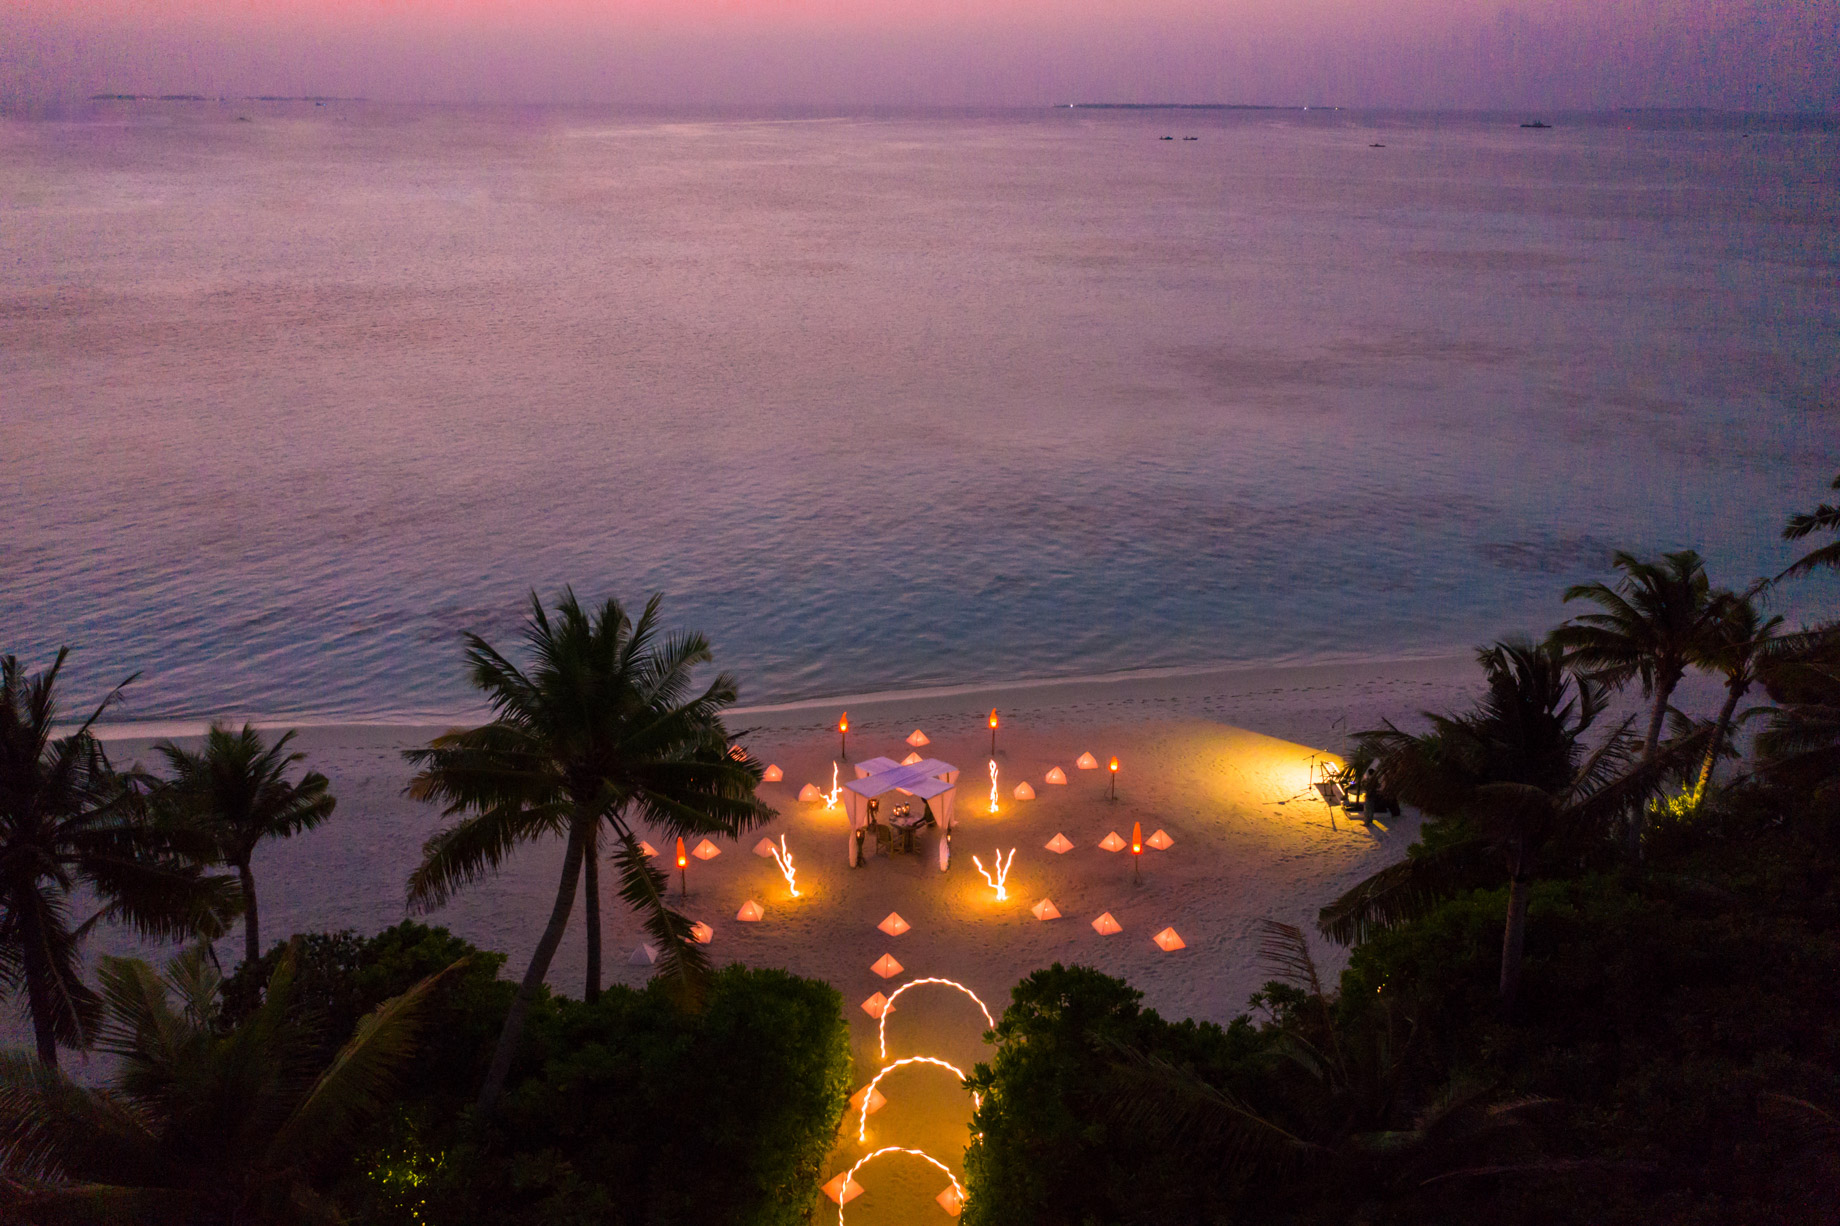 Soneva Jani Resort – Noonu Atoll, Medhufaru, Maldives – Private Island Beach Dinner Sunset